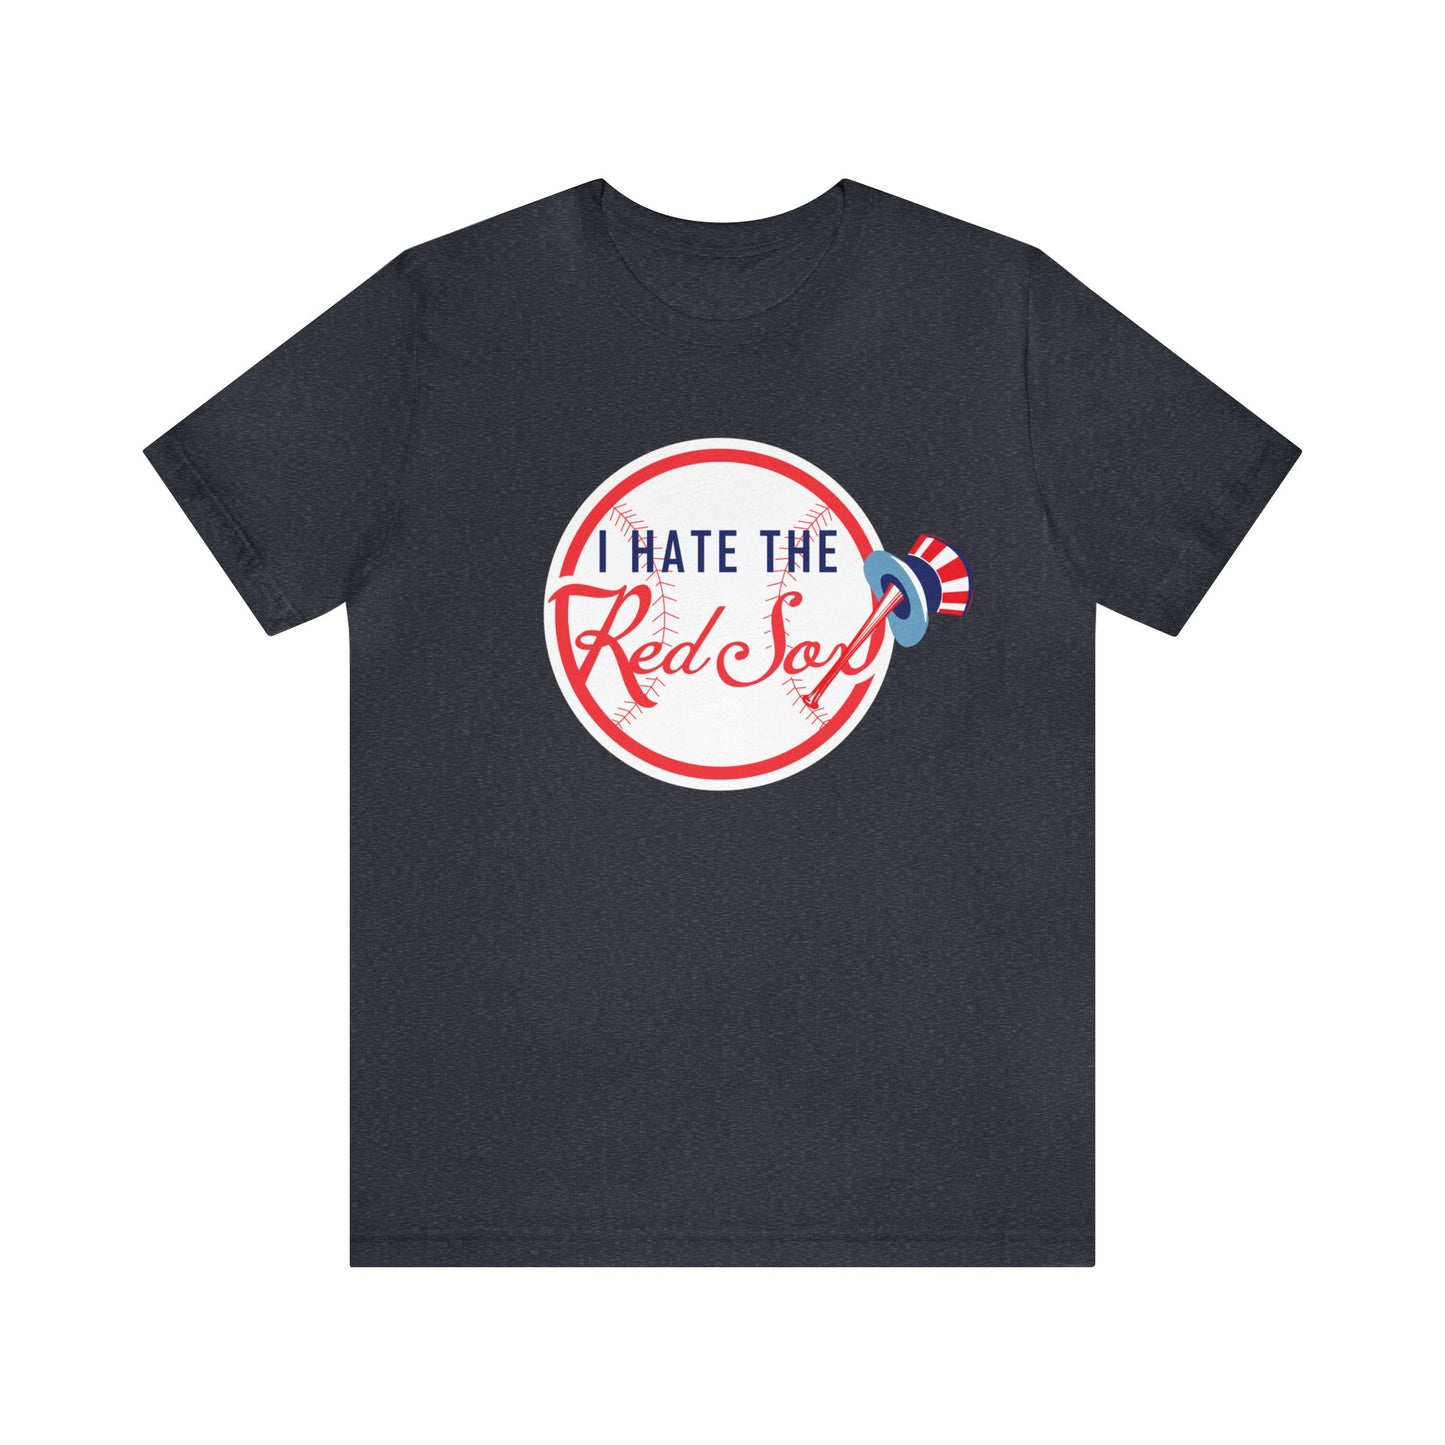 I Hate That Boston Sox Team (NY Yanks Fans) - Unisex Jersey Short Sleeve Tee